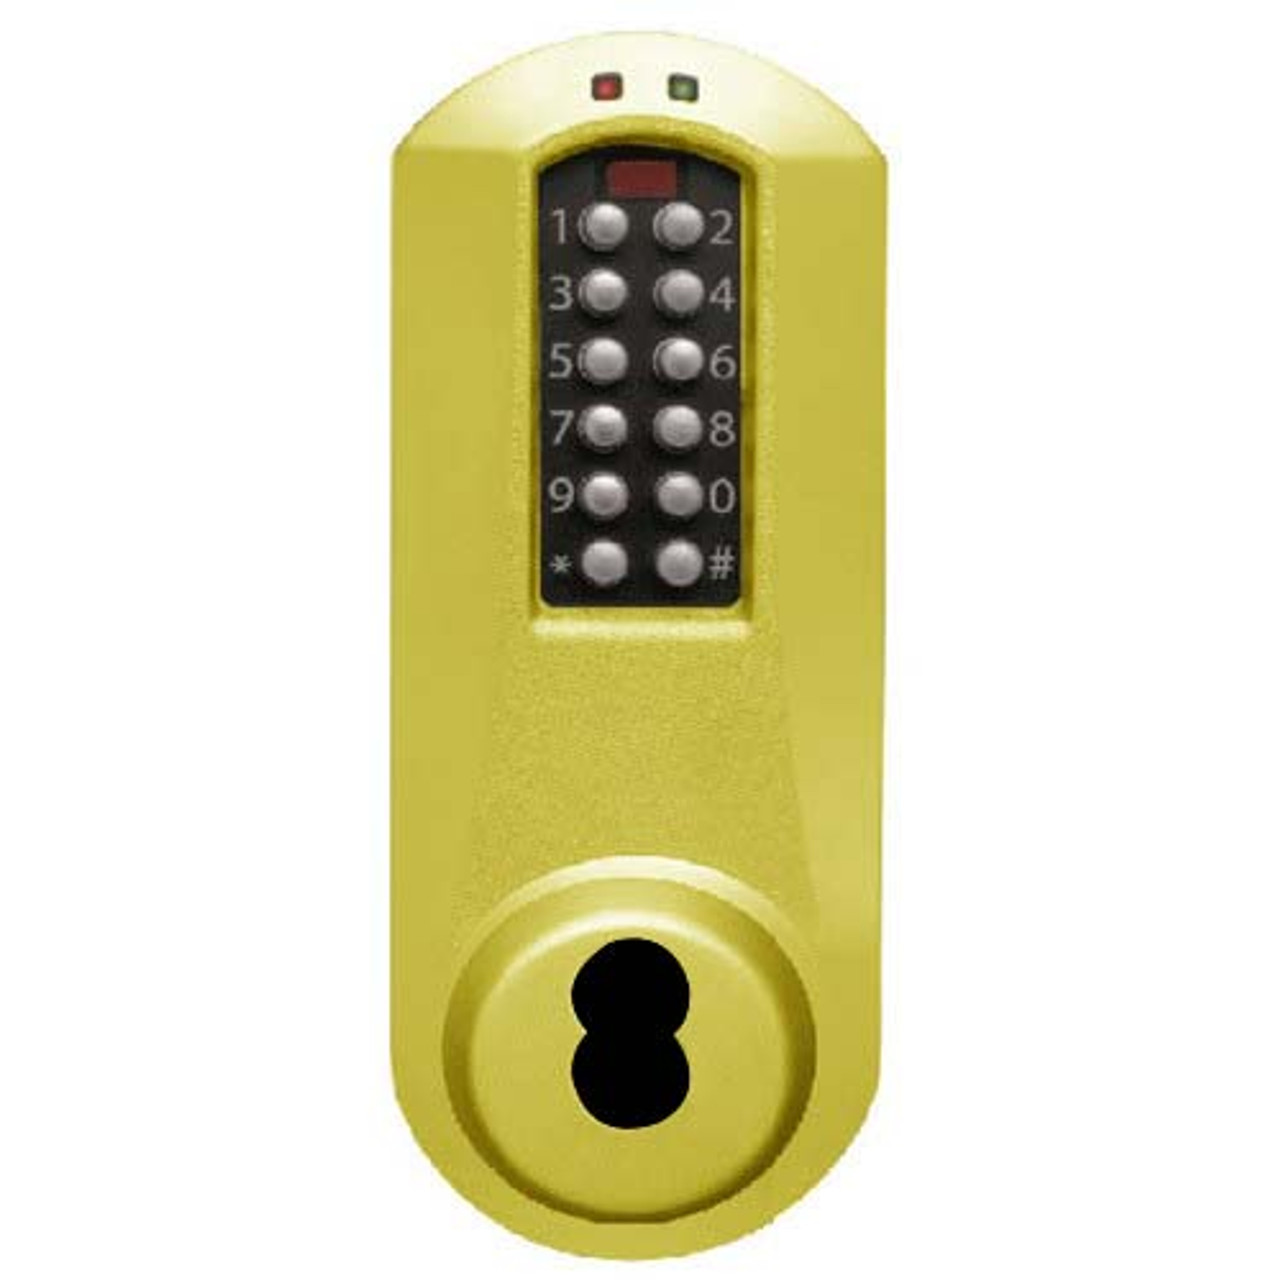 Eplex Pushbutton Lock in Bright Brass Finish